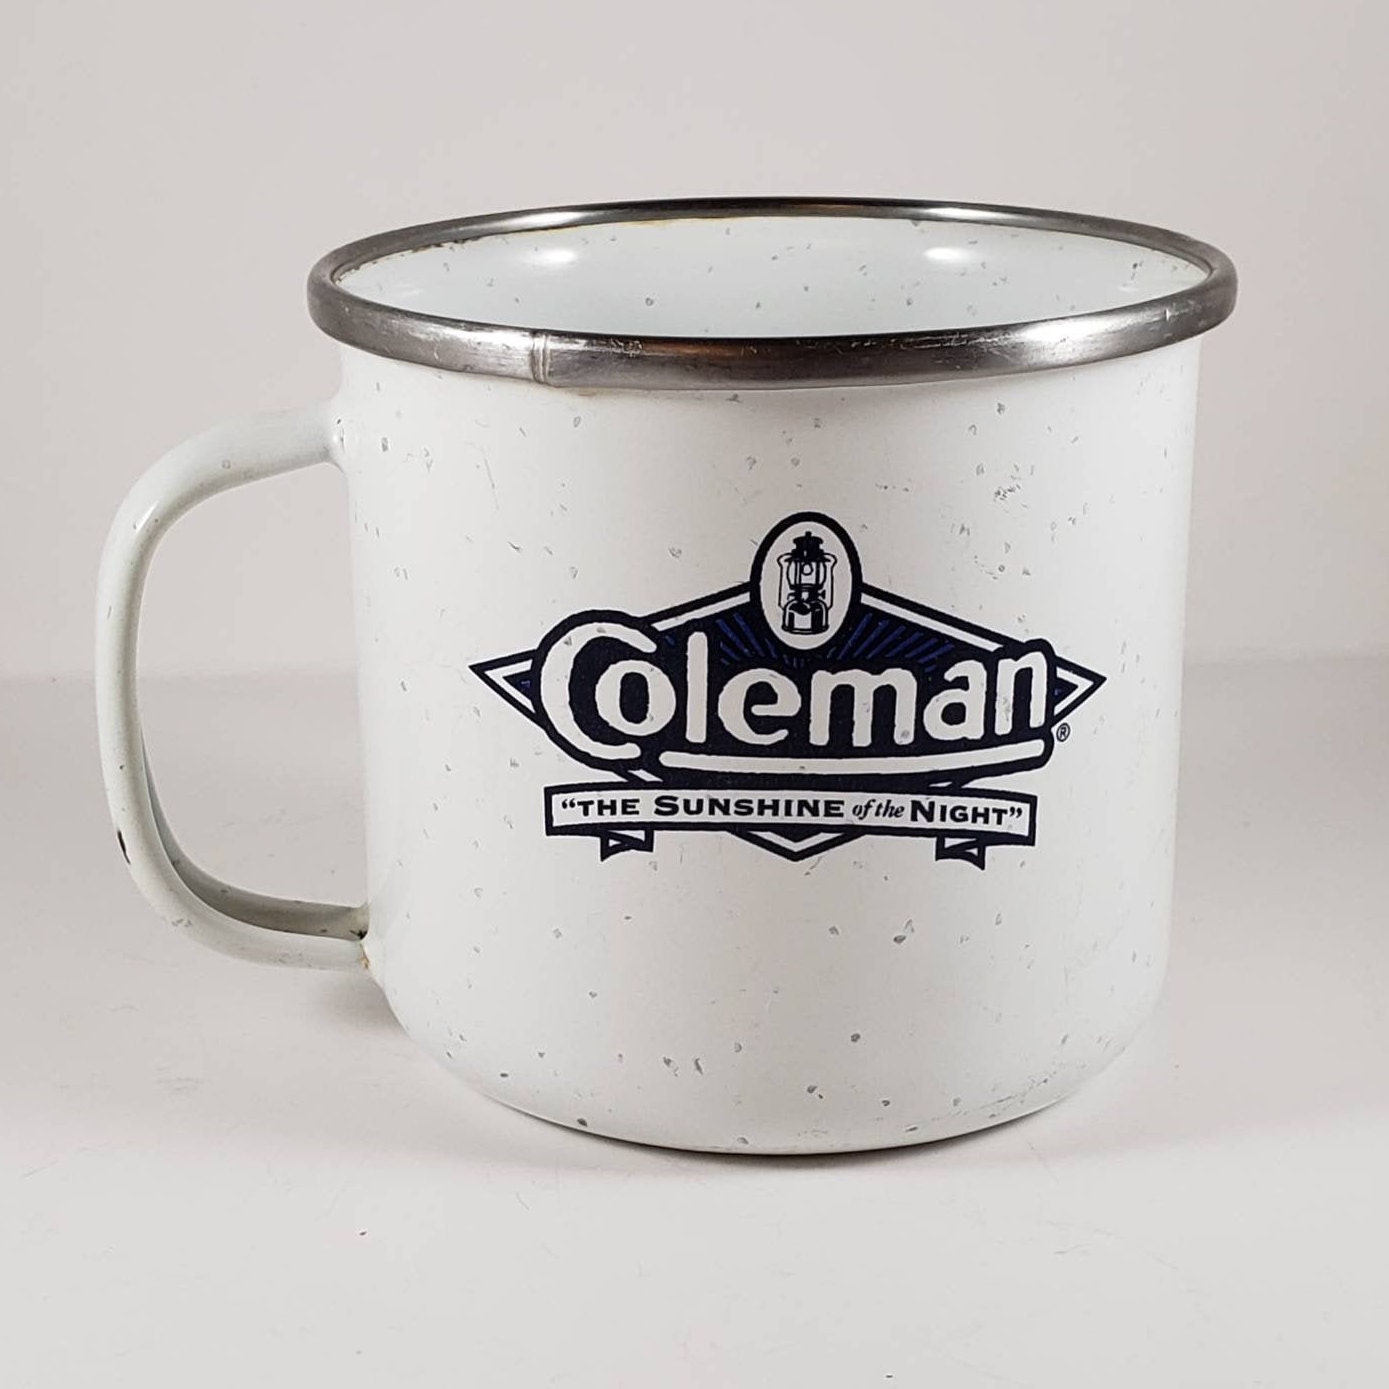 Coleman Vintage Metal Coffee Mug Speckled White Blue Silver Enamel